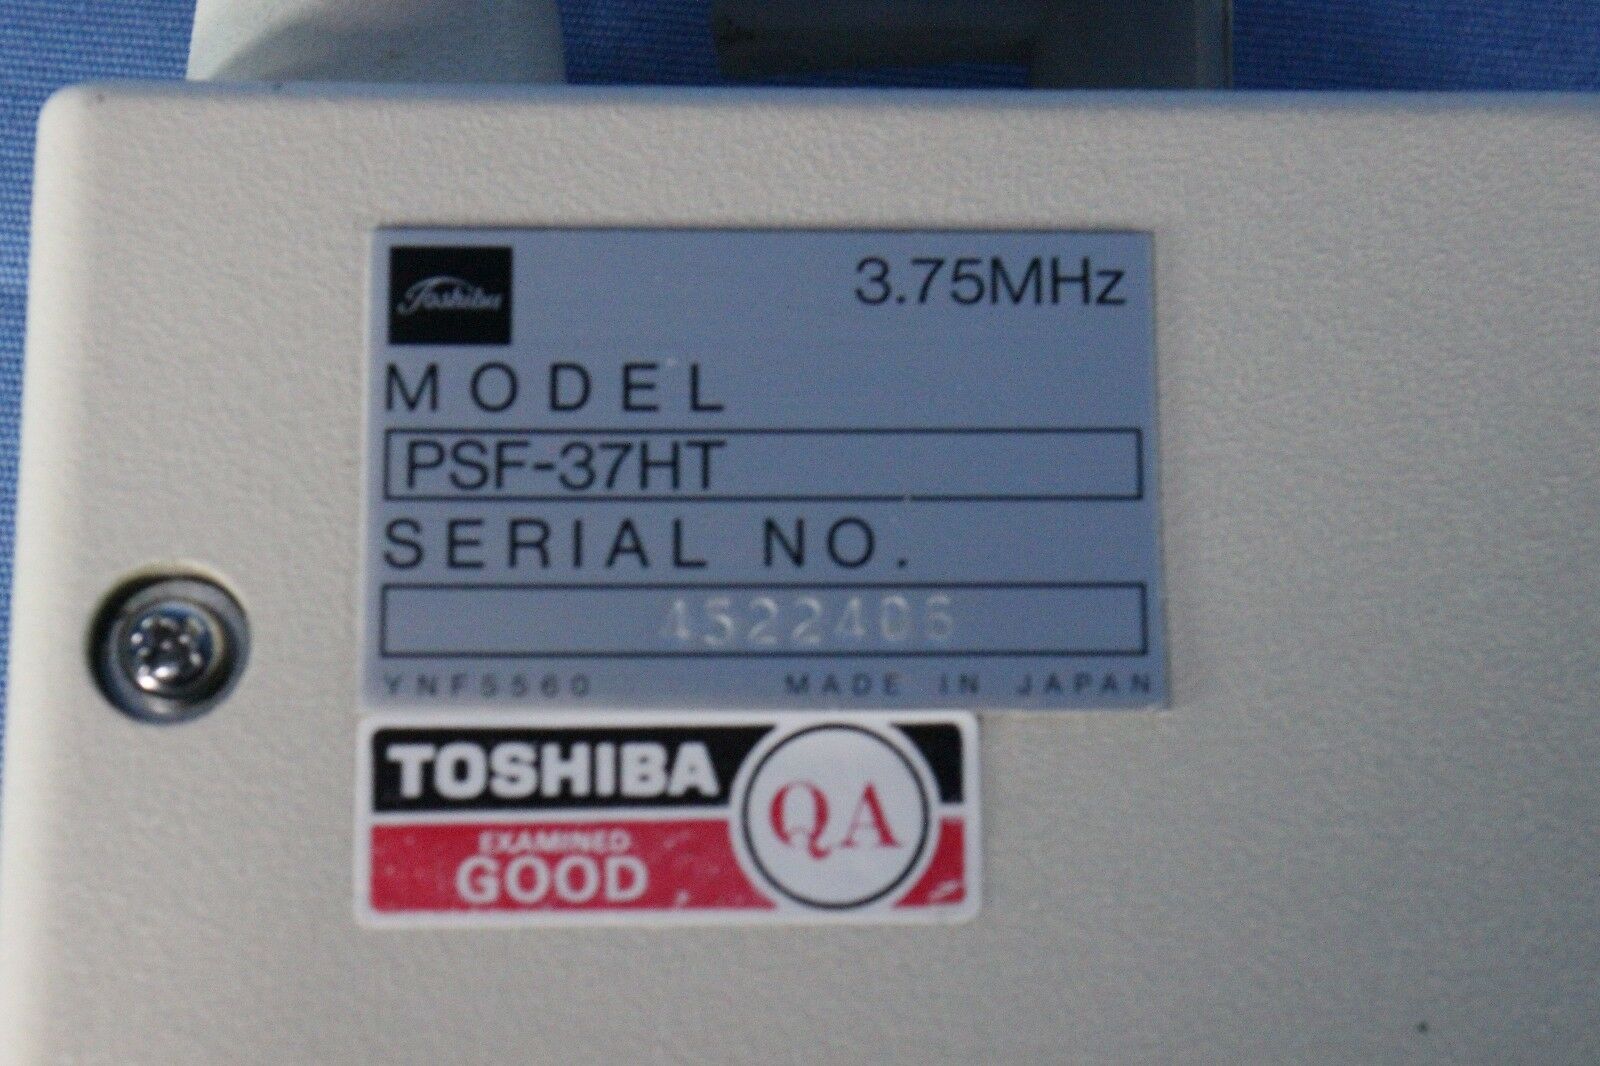 Toshiba PSF-37HT Ultrasound Transducer 3.75MHz Ultrasound Probe with Warranty DIAGNOSTIC ULTRASOUND MACHINES FOR SALE